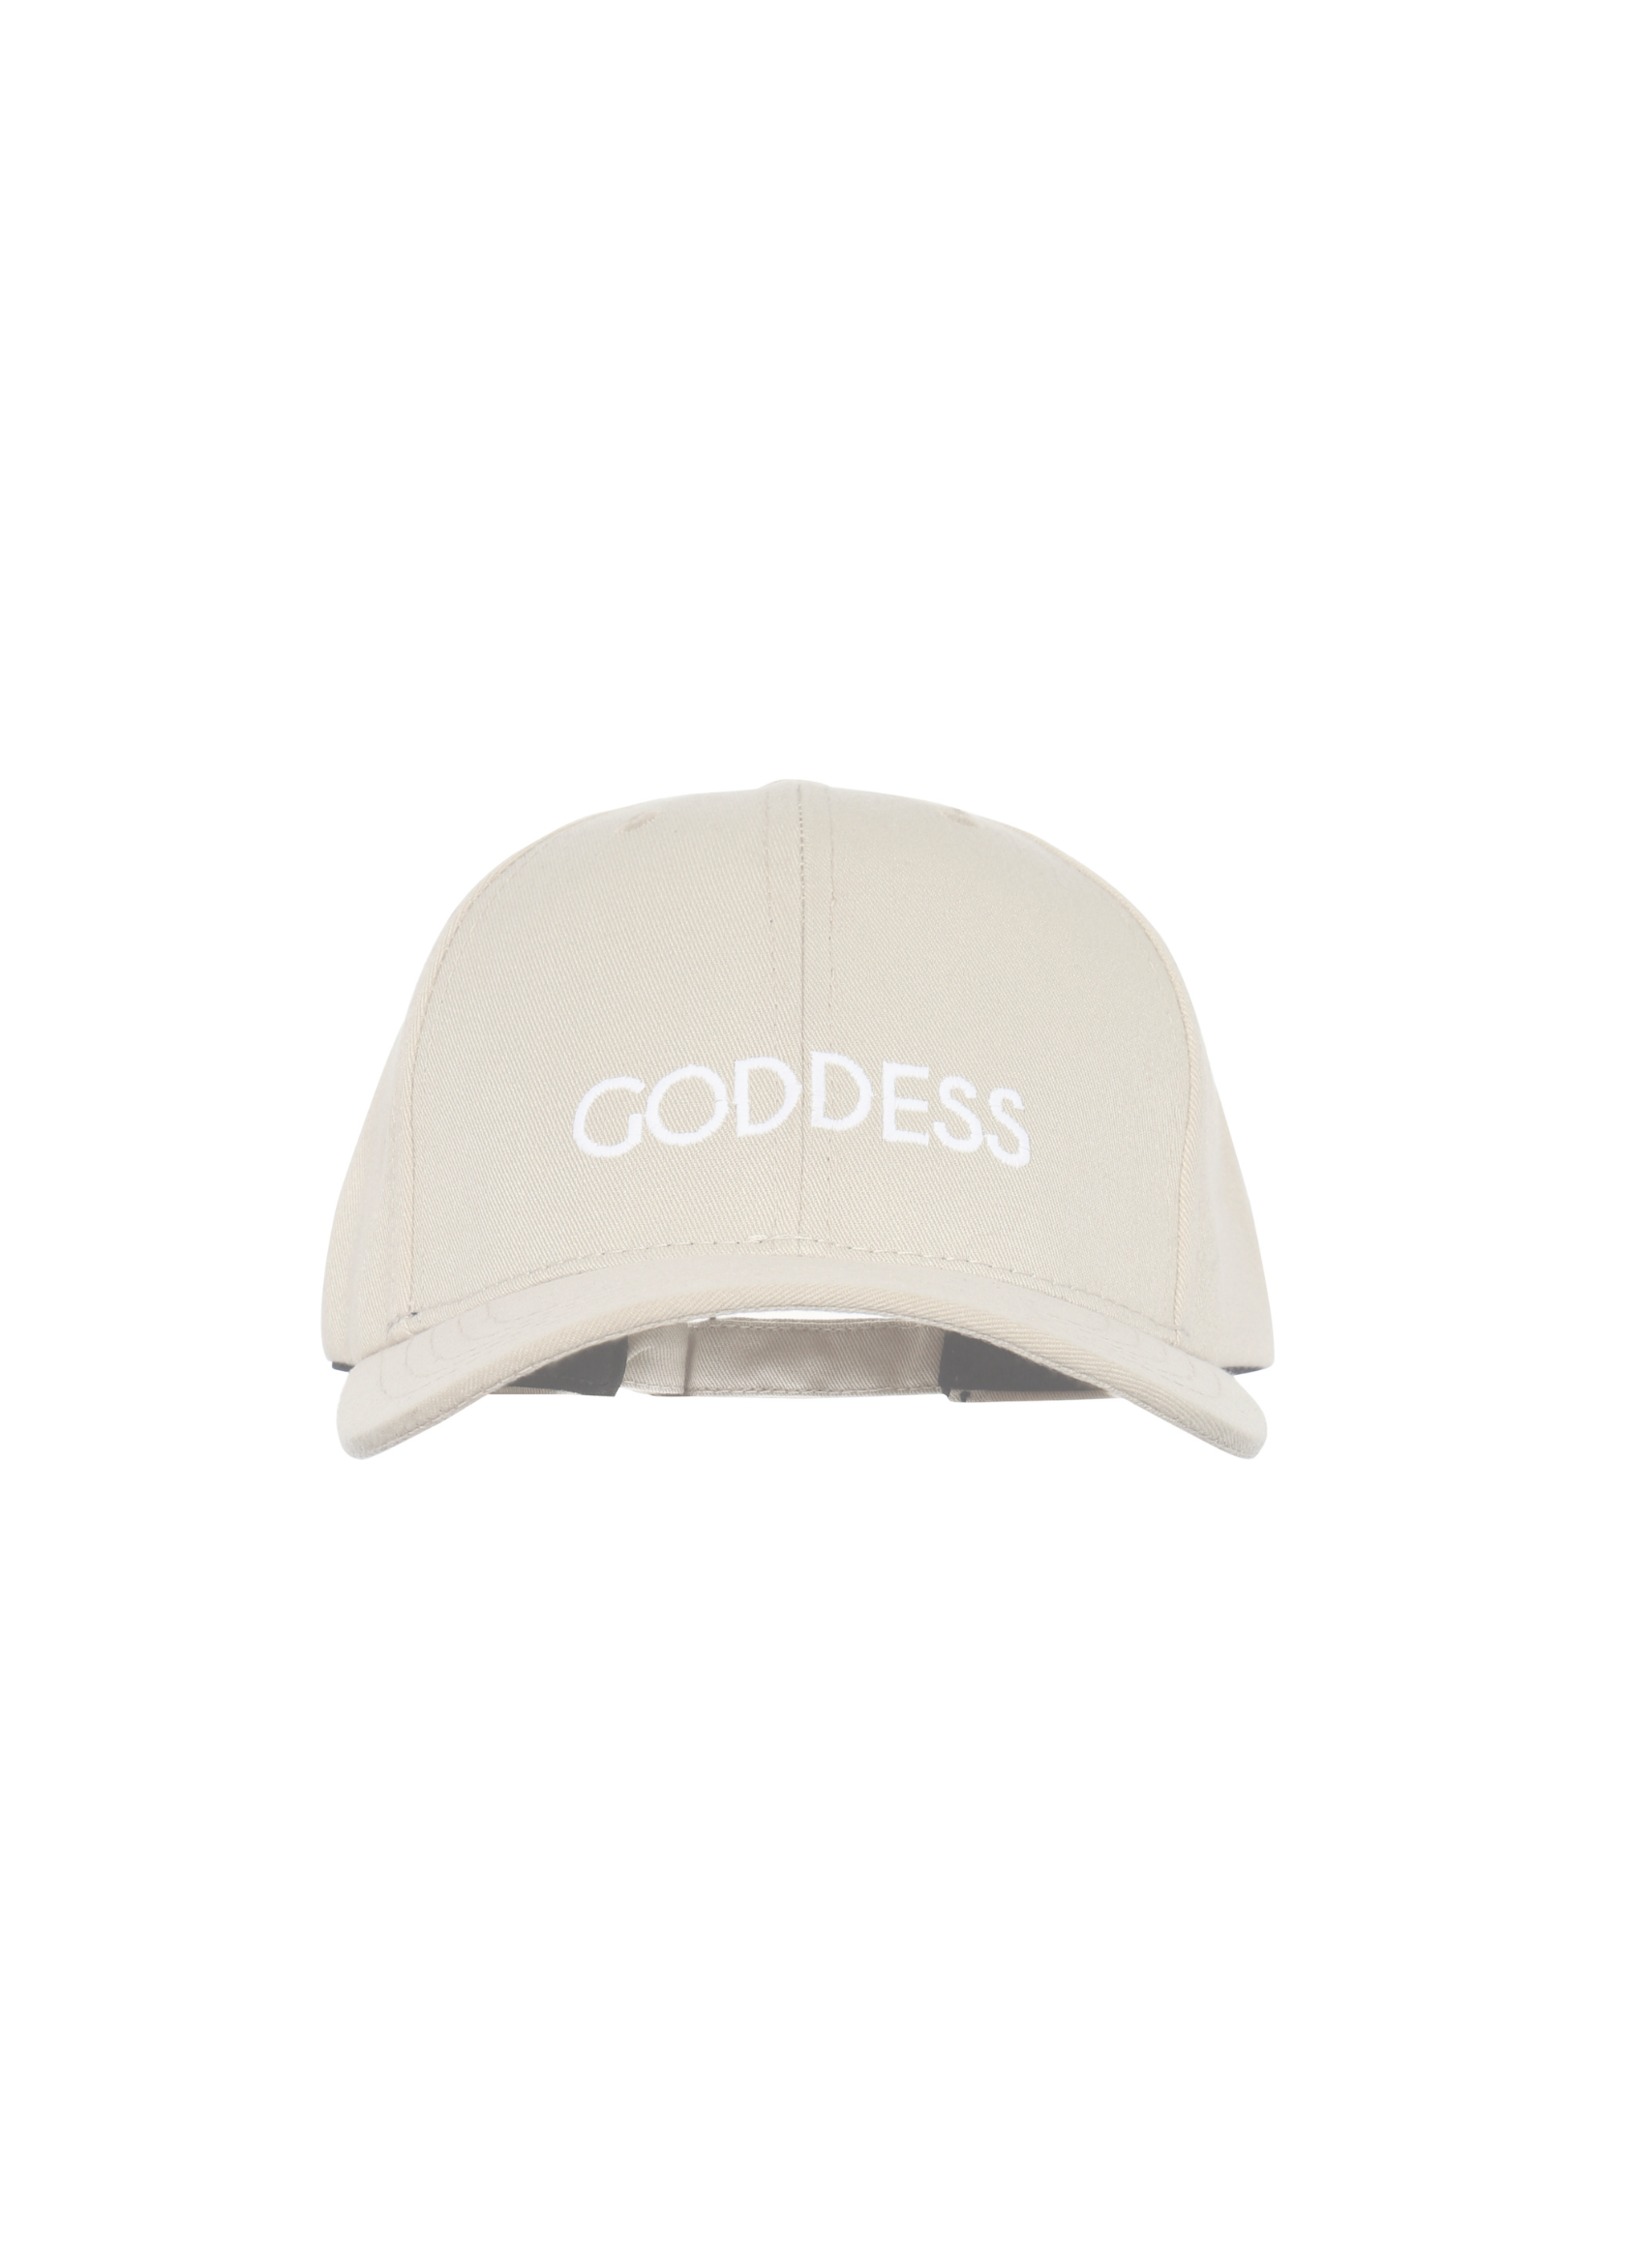 GODDESS BASEBALL CAP - NUDE